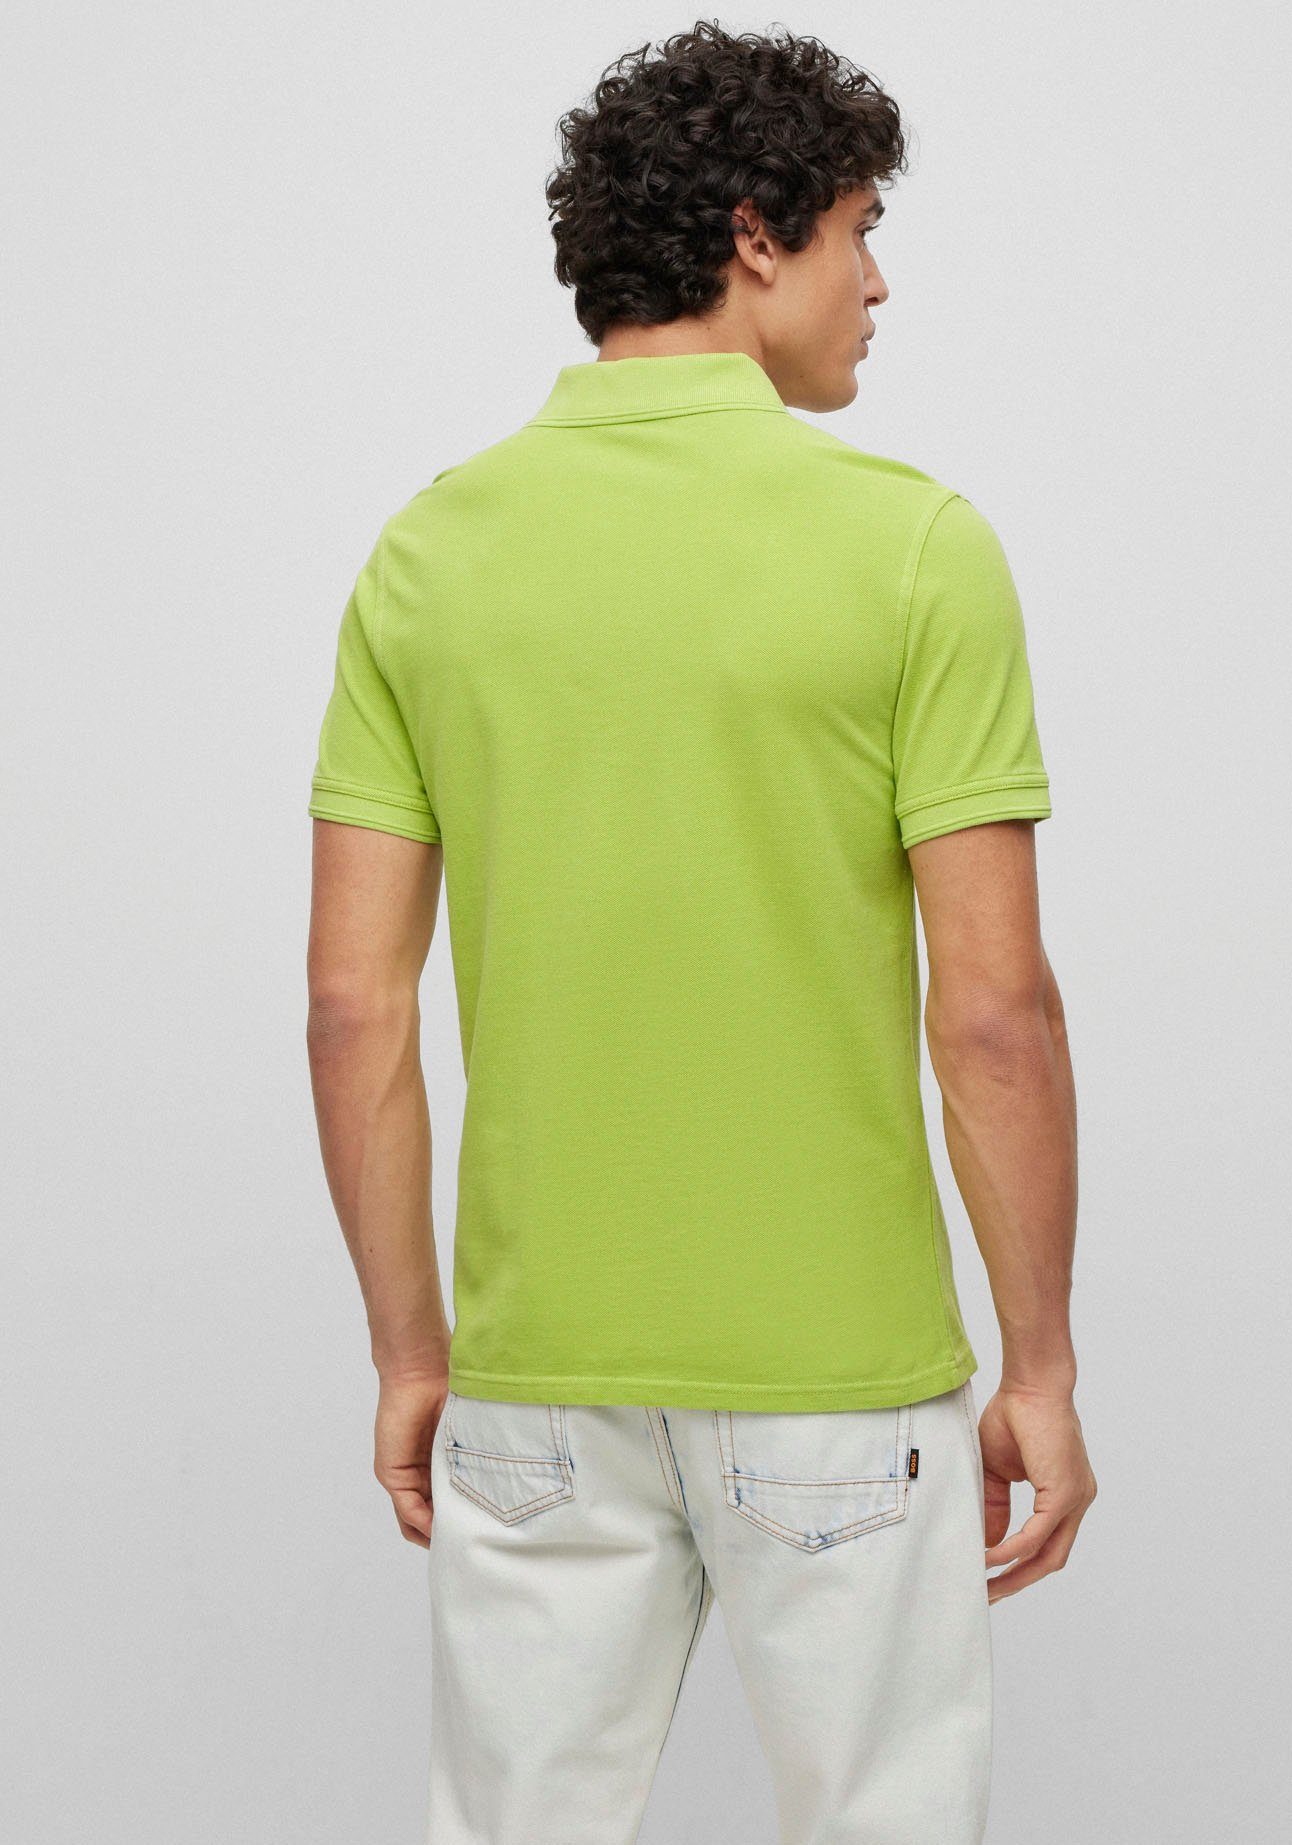 BOSS ORANGE Poloshirt am Green Bright Logoschriftzug Prime mit Brustkorb